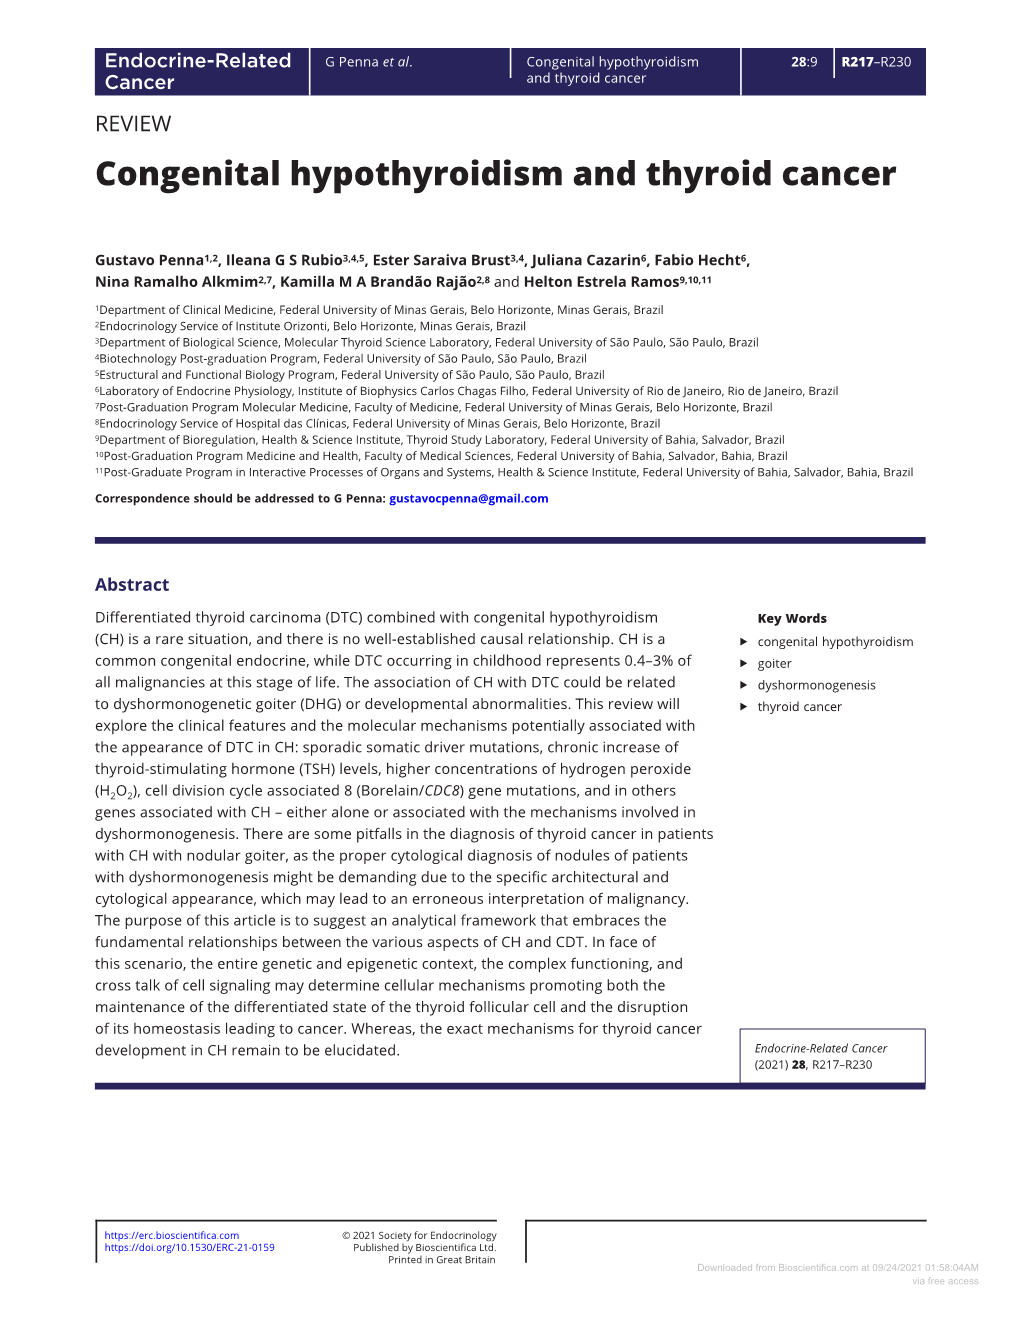 Congenital Hypothyroidism and Thyroid Cancer